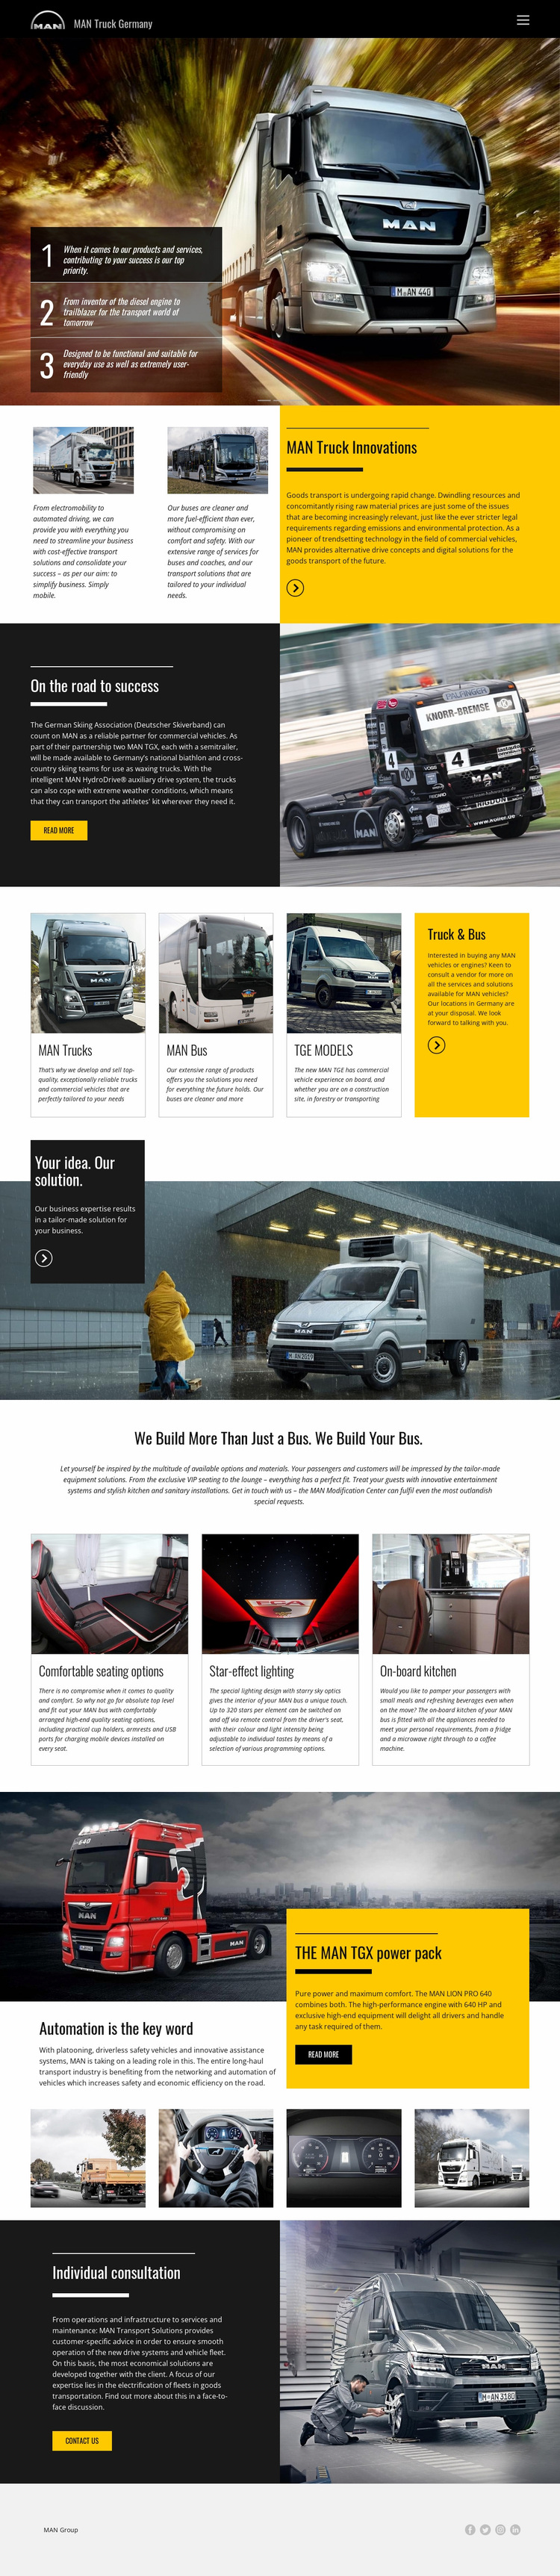 Man trucks for transportation Website Design